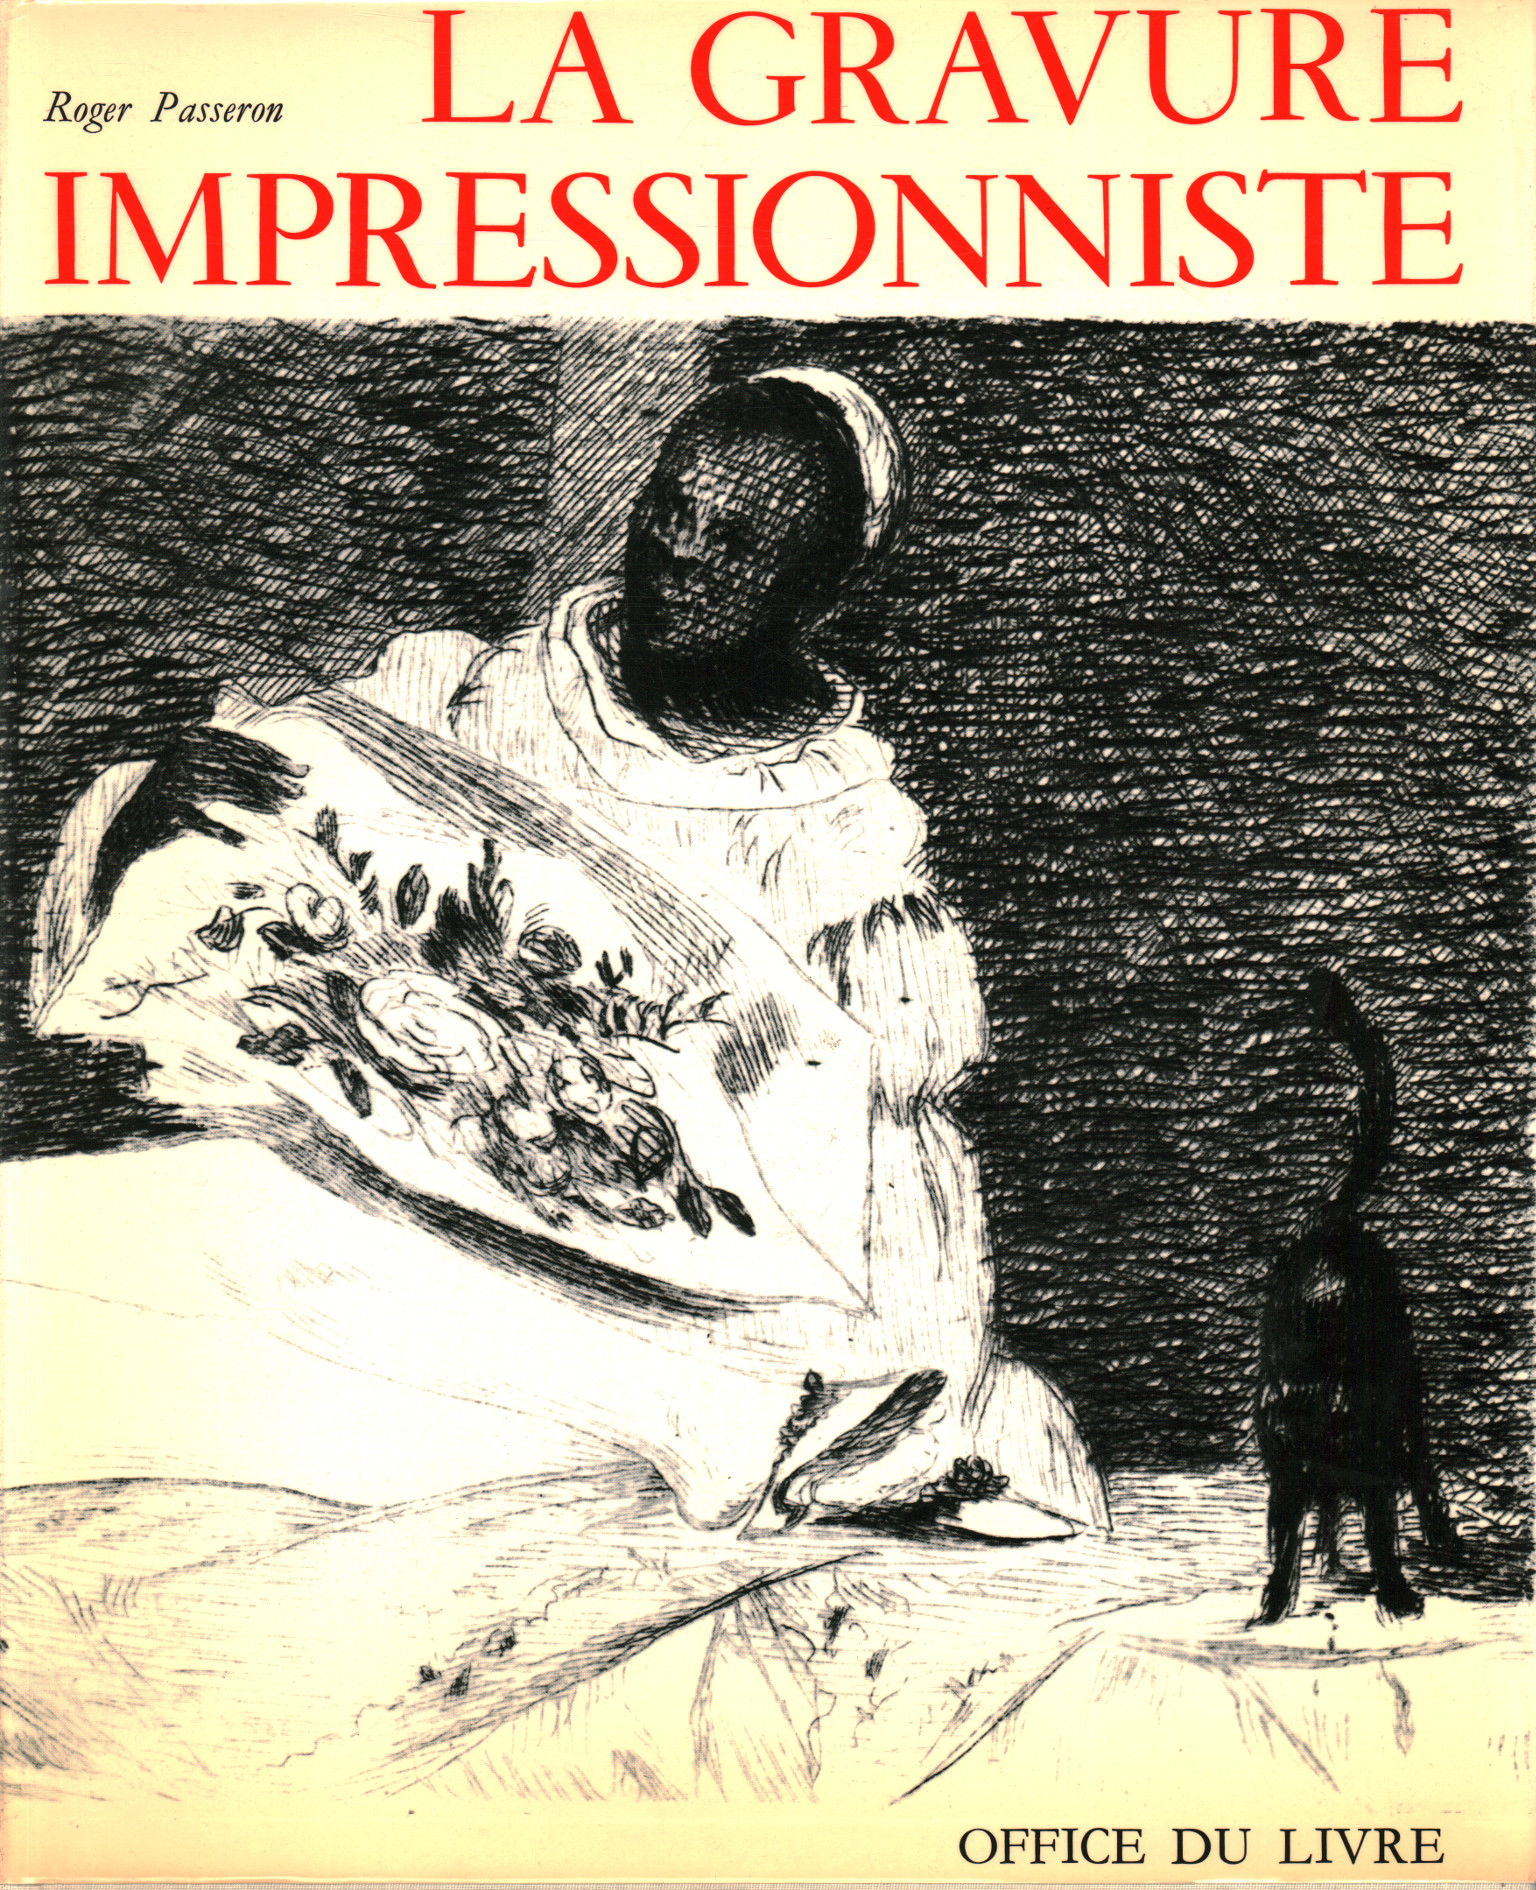 The impressionnist gravure, Roger Passeron